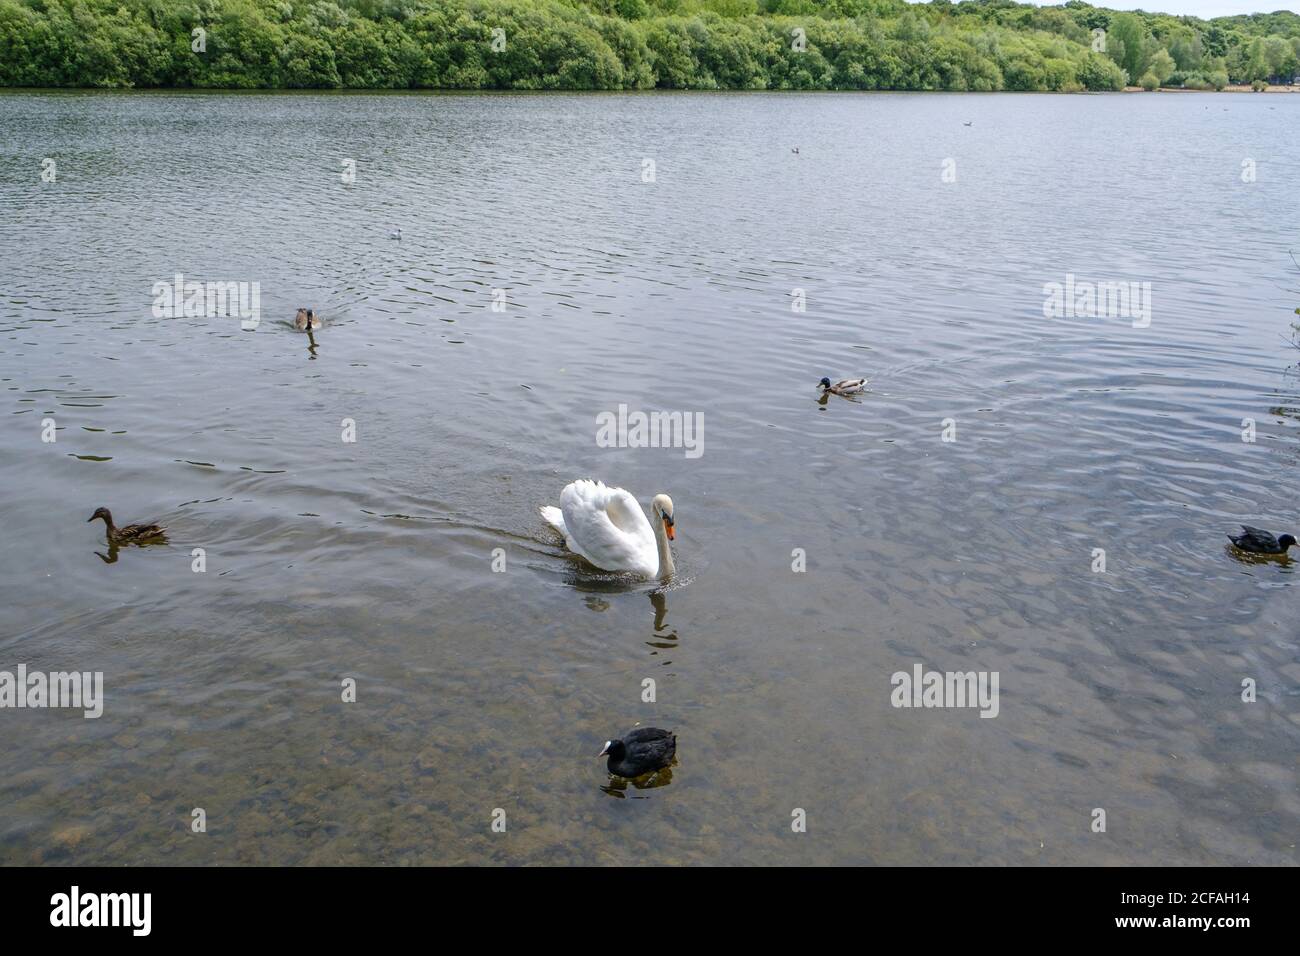 A mute swan, coots, male & female mallard ducks swim in Ruislip Lido reservoir, a 60-acre lake, Ruislip Hillingdon, North West London, England, UK. Stock Photo